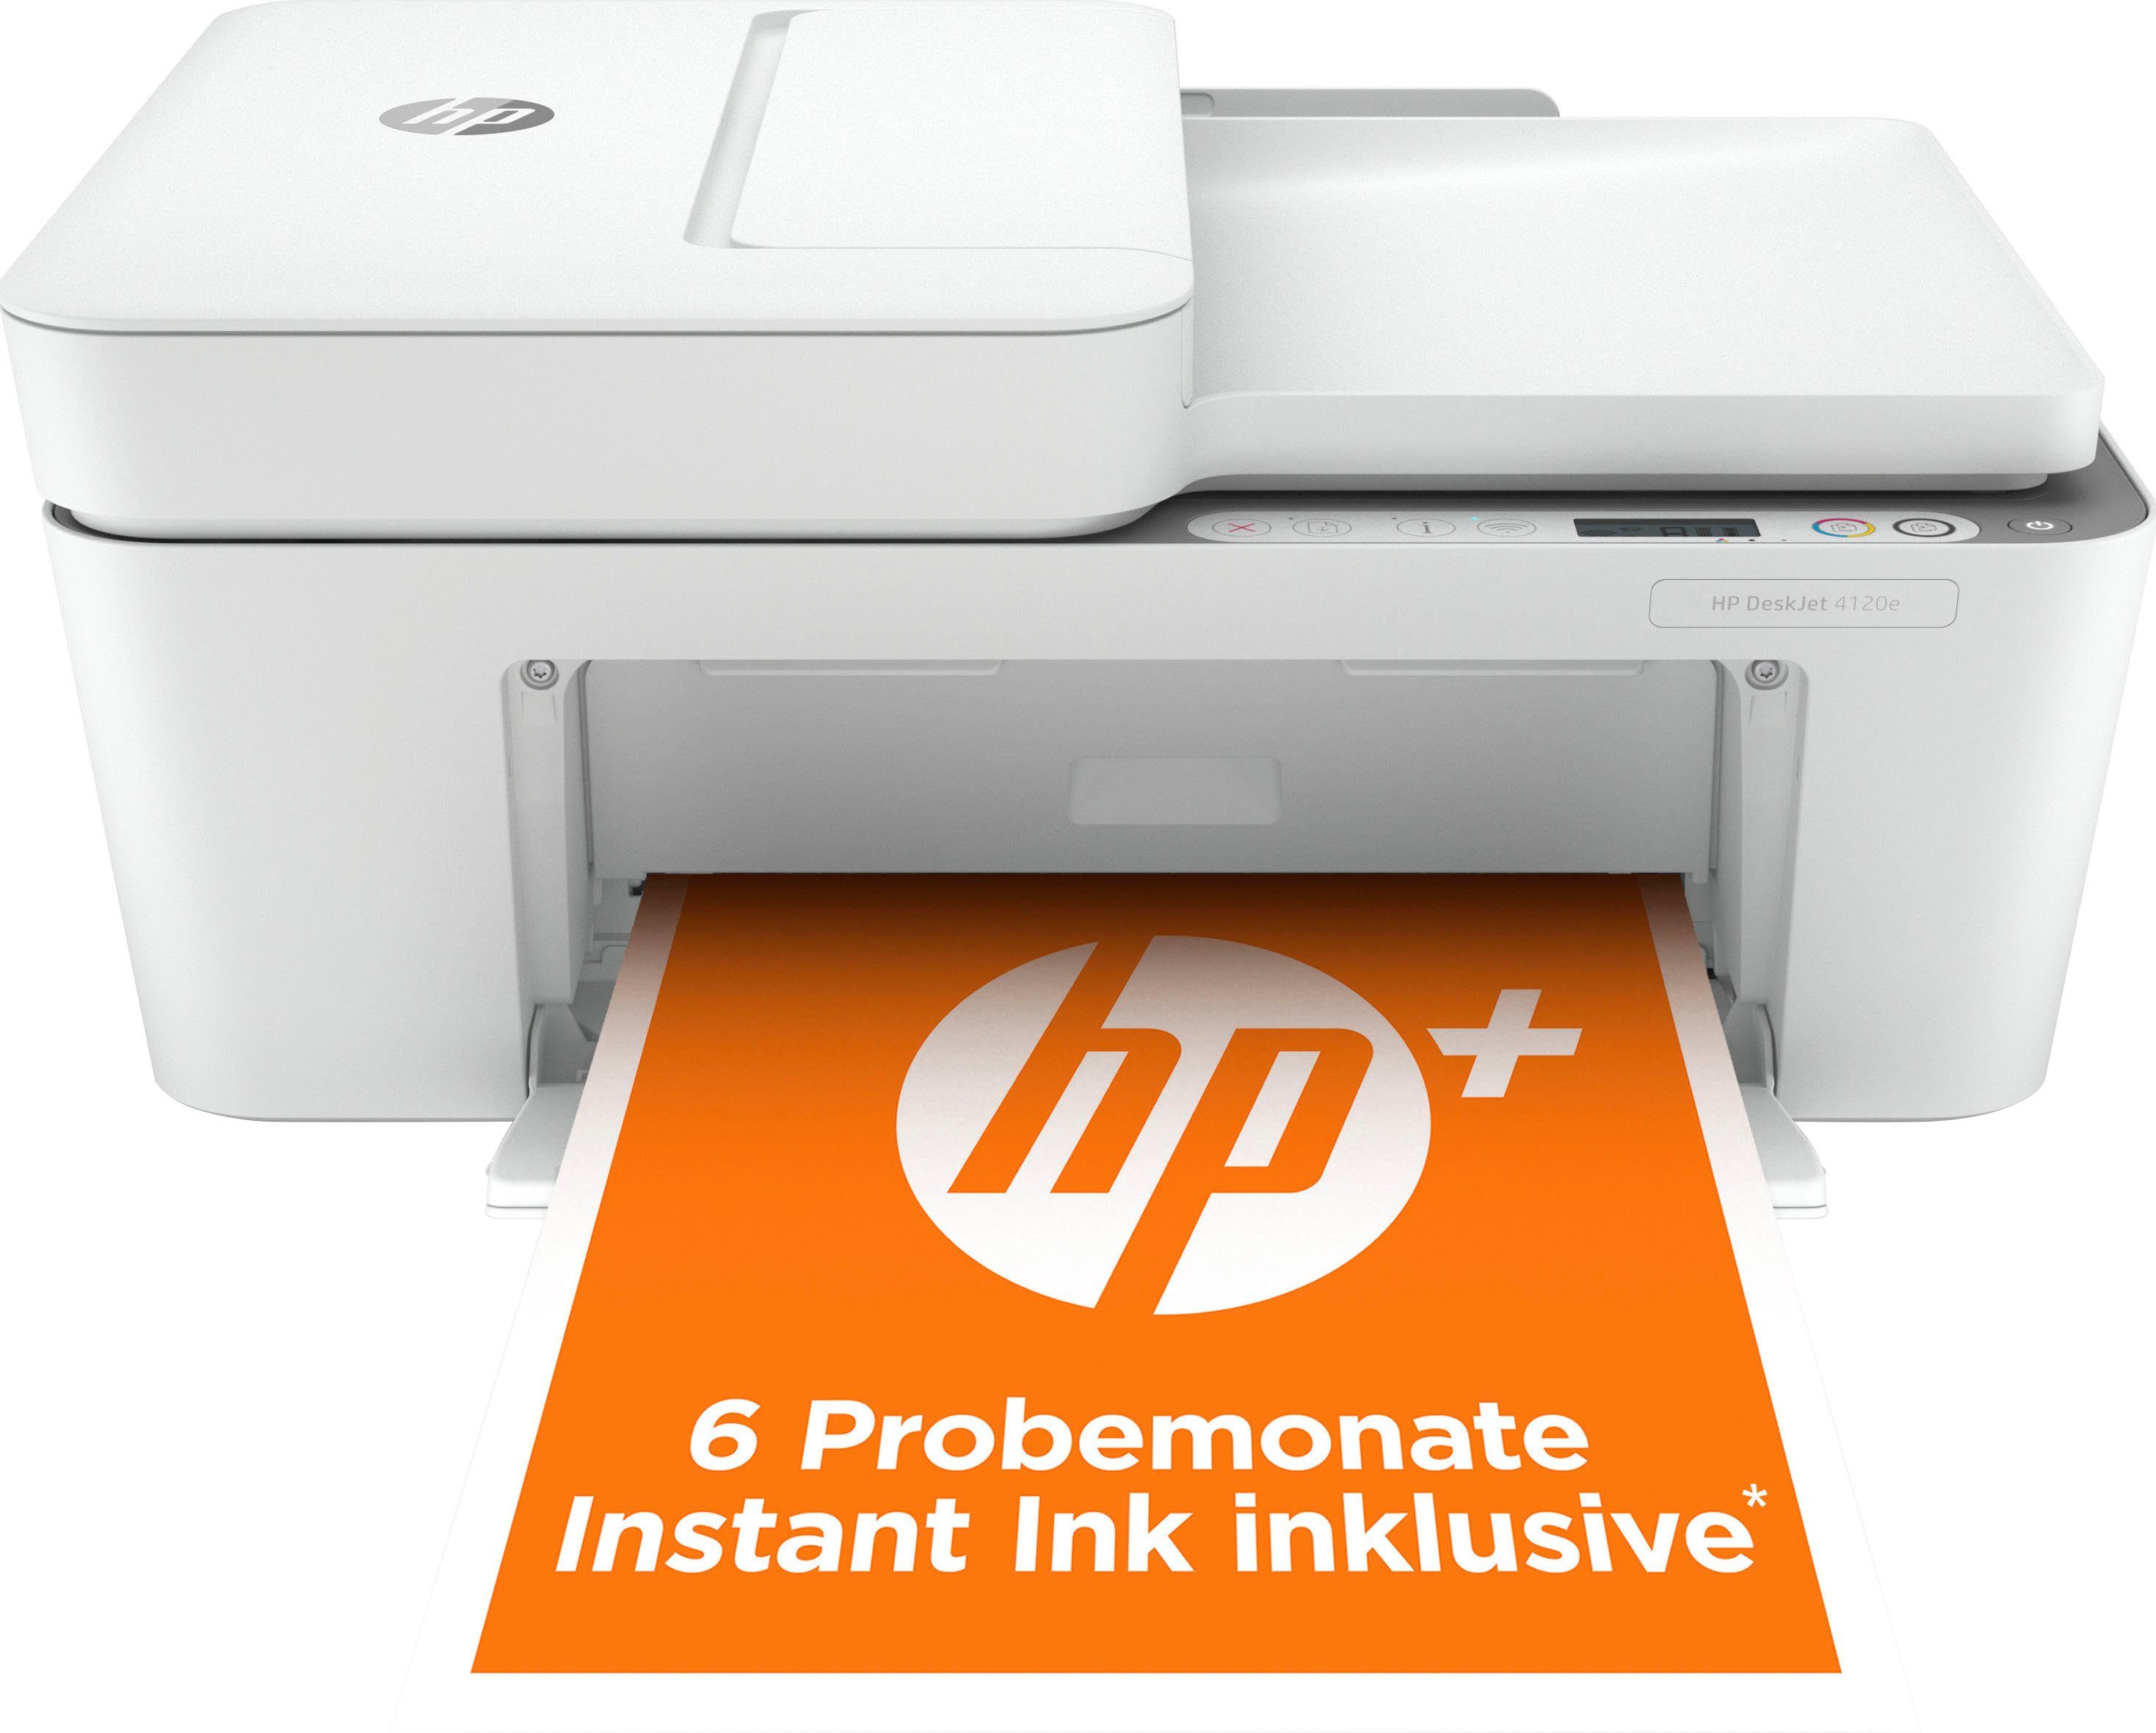 HP All-in-oneprinter 4120e All in one printer HP+ Instant inc compatibel in de online winkel | OTTO